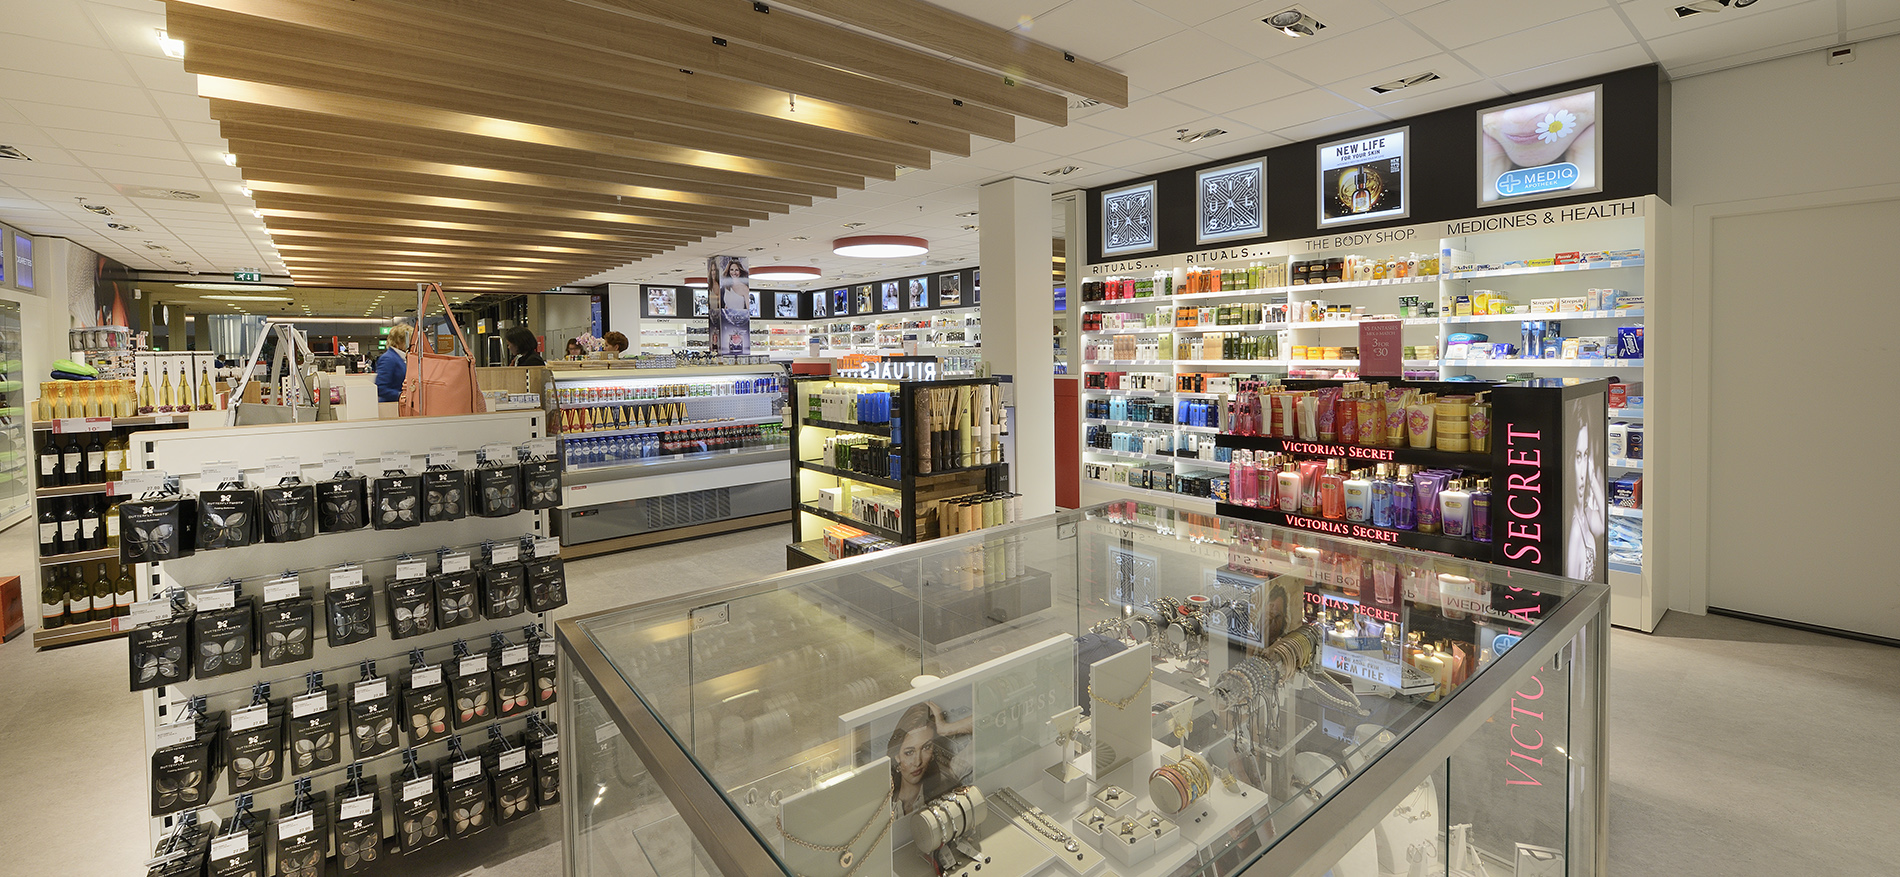 B&S Crewshop Airport Schiphol (NL) – Retail design and shopfitting - 